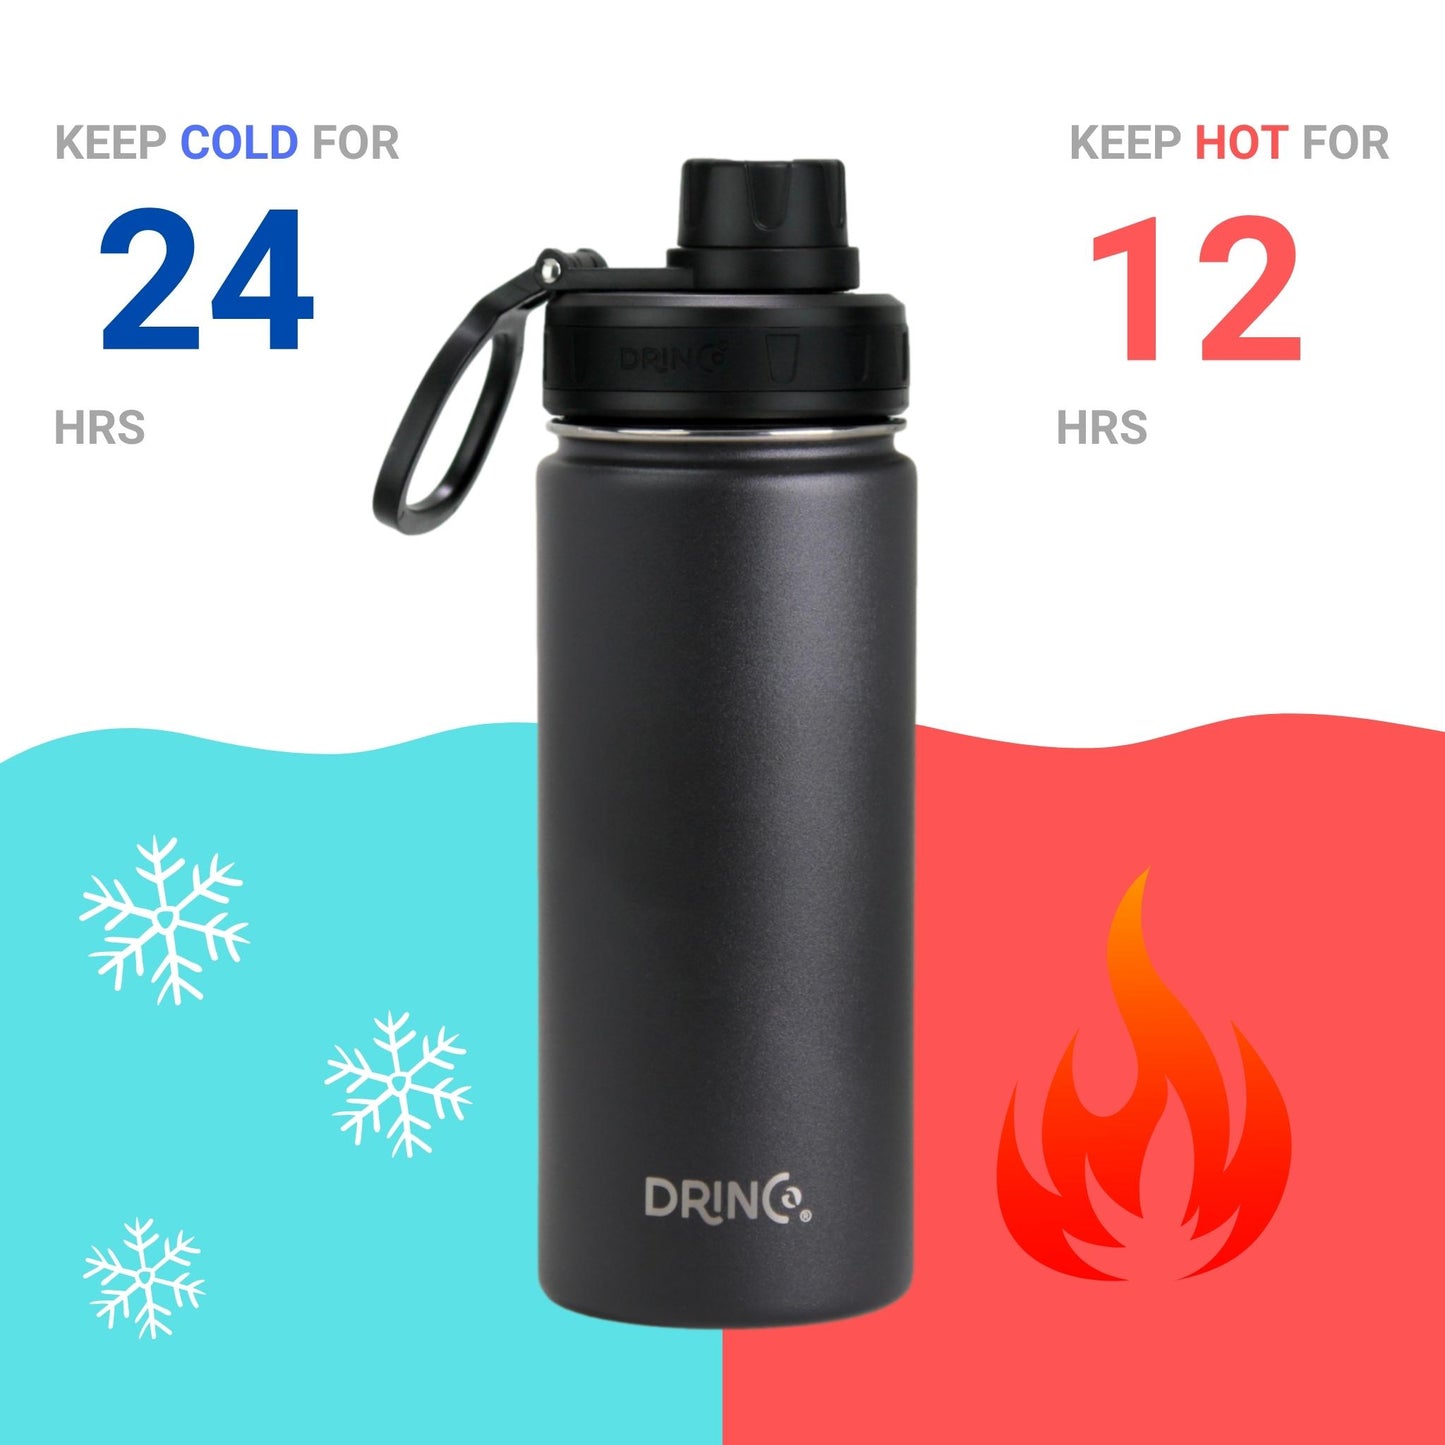 DRINCO® 18oz Stainless Steel Sport Water Bottle - Black